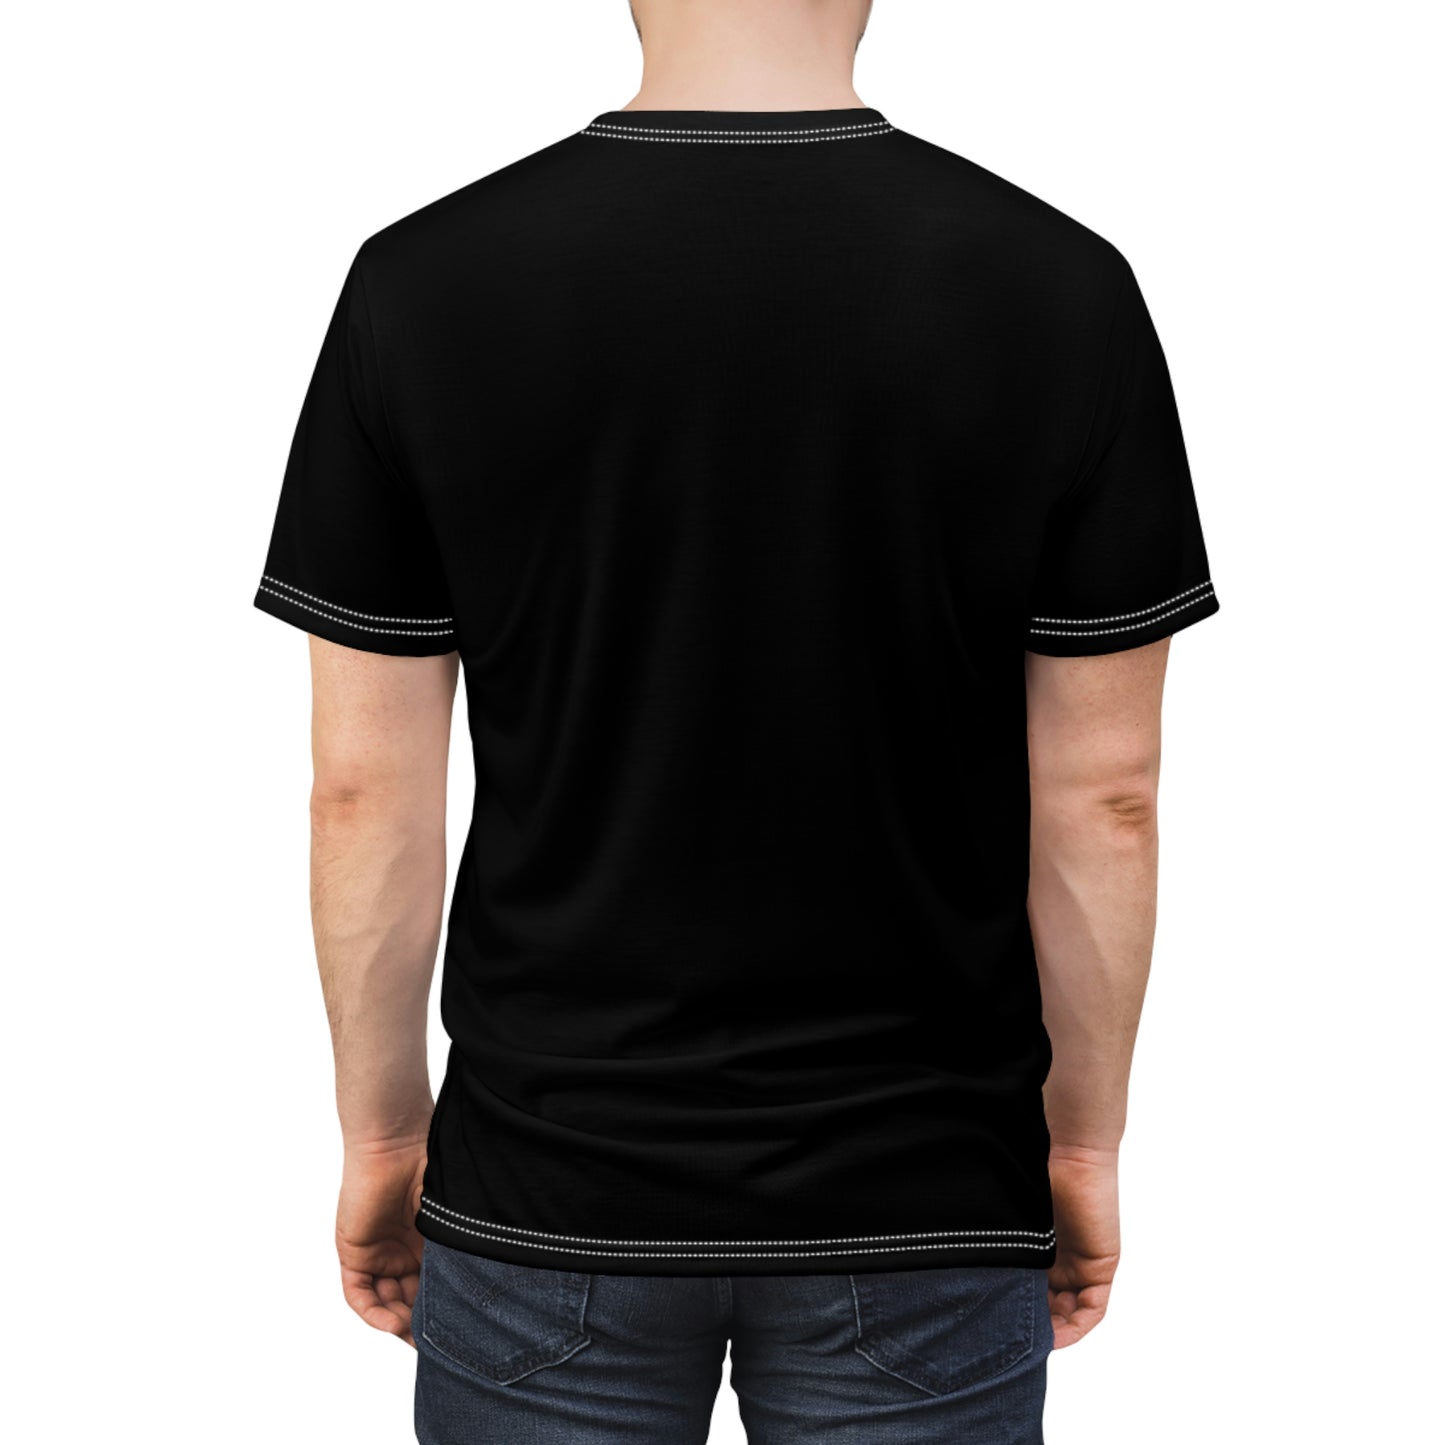 Thanátou - Unisex All-Over Print Cut & Sew T-Shirt